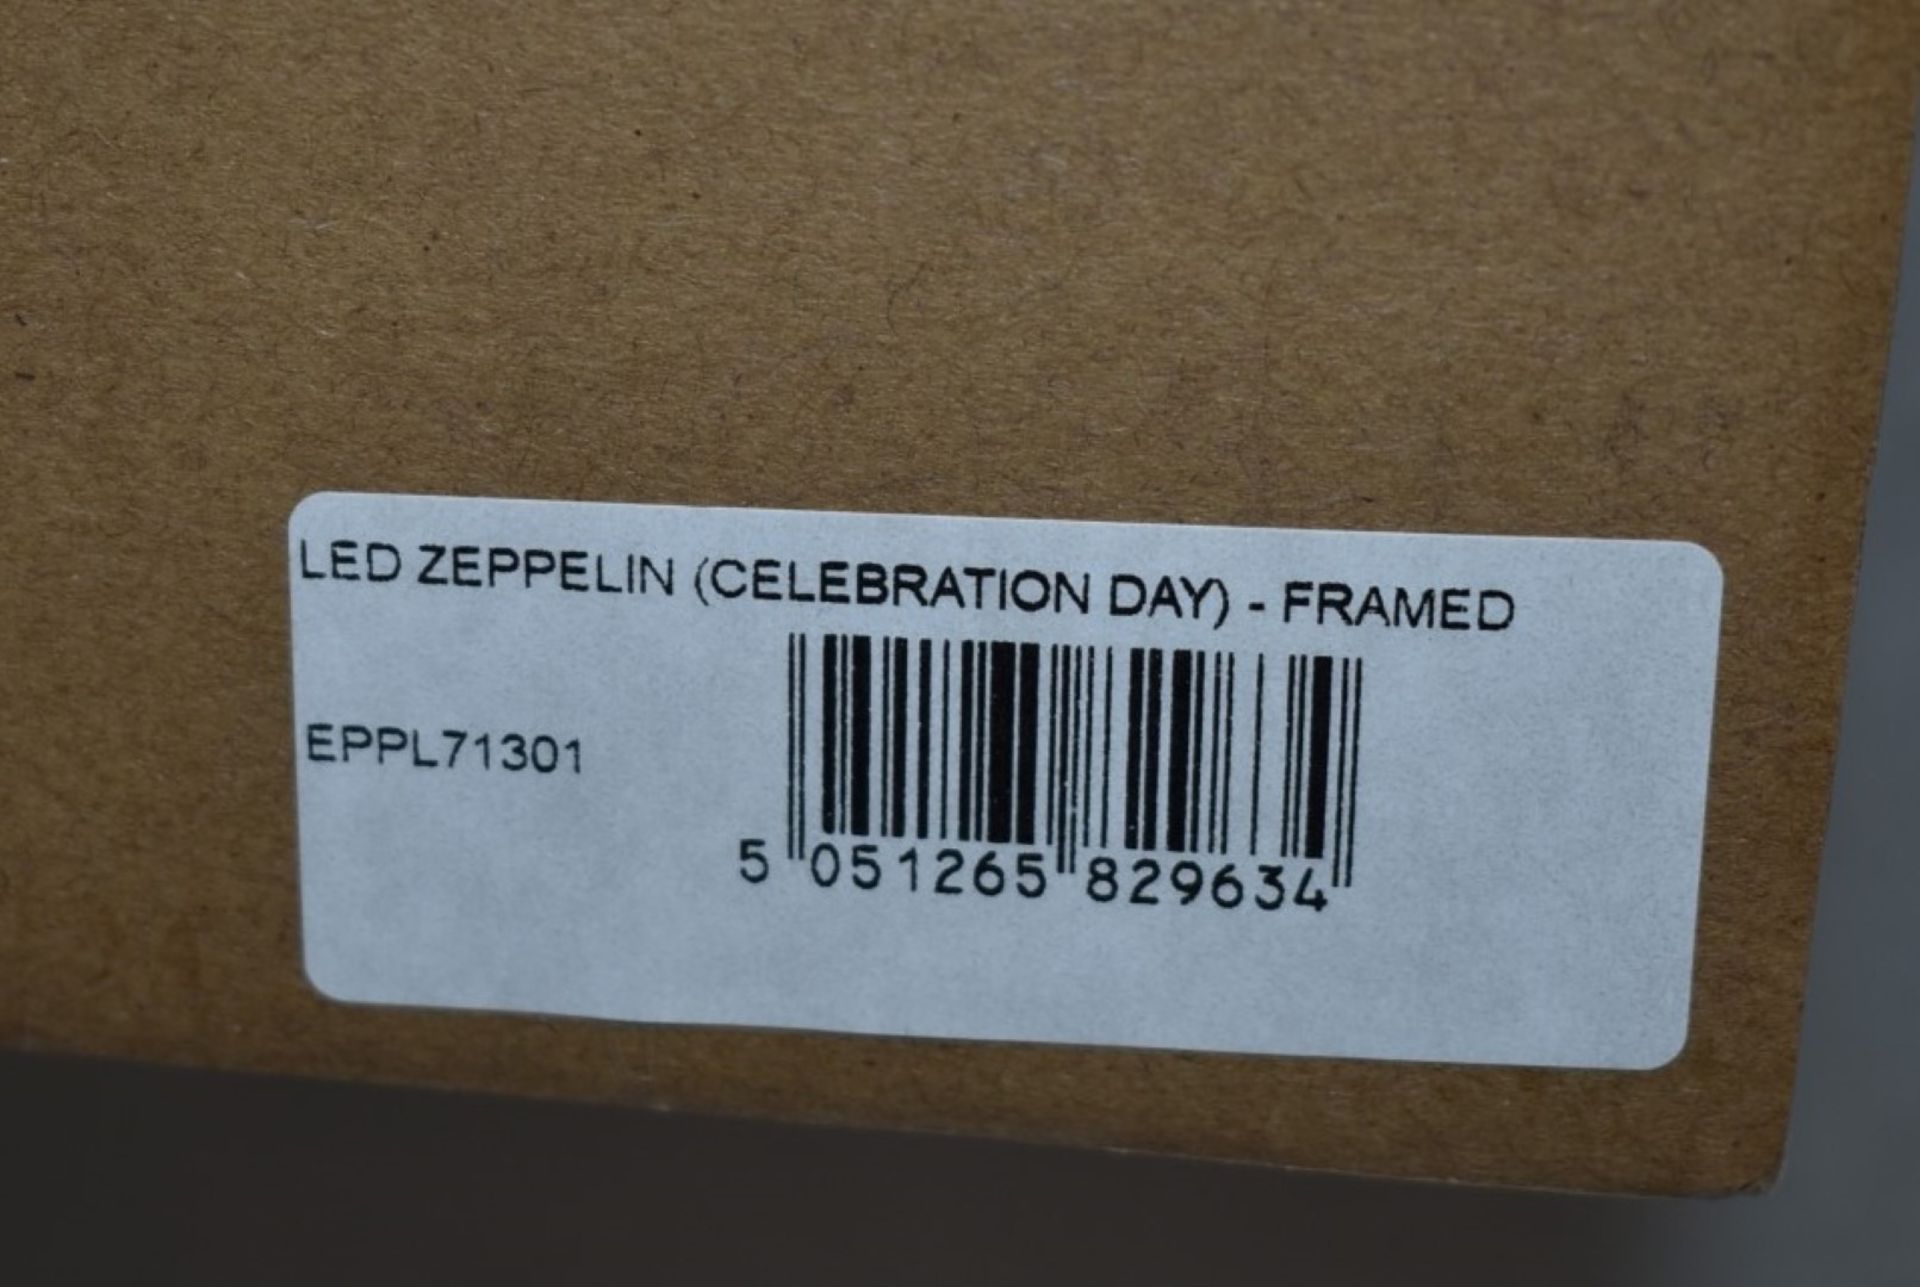 3 x Led Zeppelin Celebration Day Framed 3D Pictures - Size: 23 x 18.5 cms - Image 2 of 3